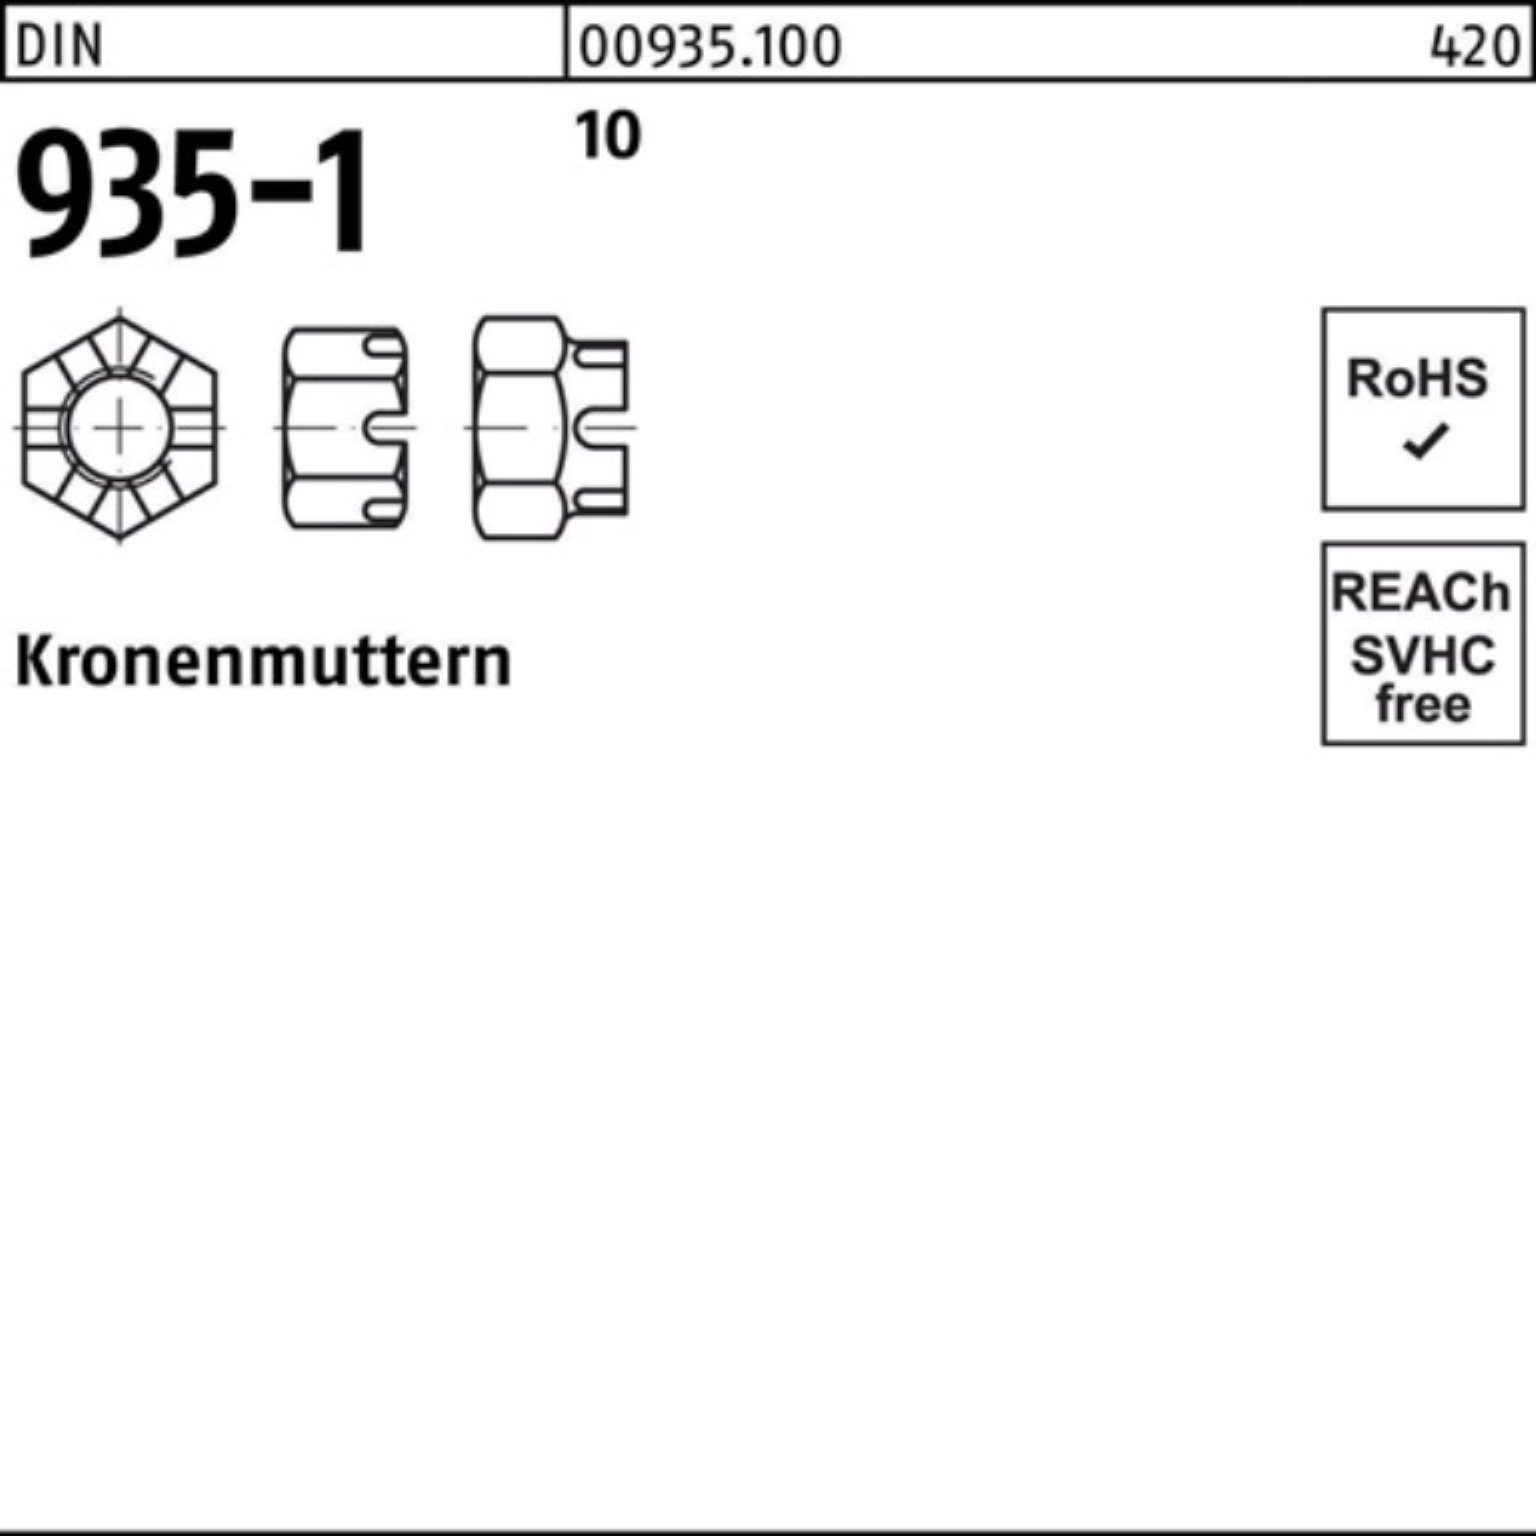 Reyher Kronenmutter 100er Pack Kronenmutter DIN 935-1 M16 10 50 Stück DIN 935-1 10 Kronen